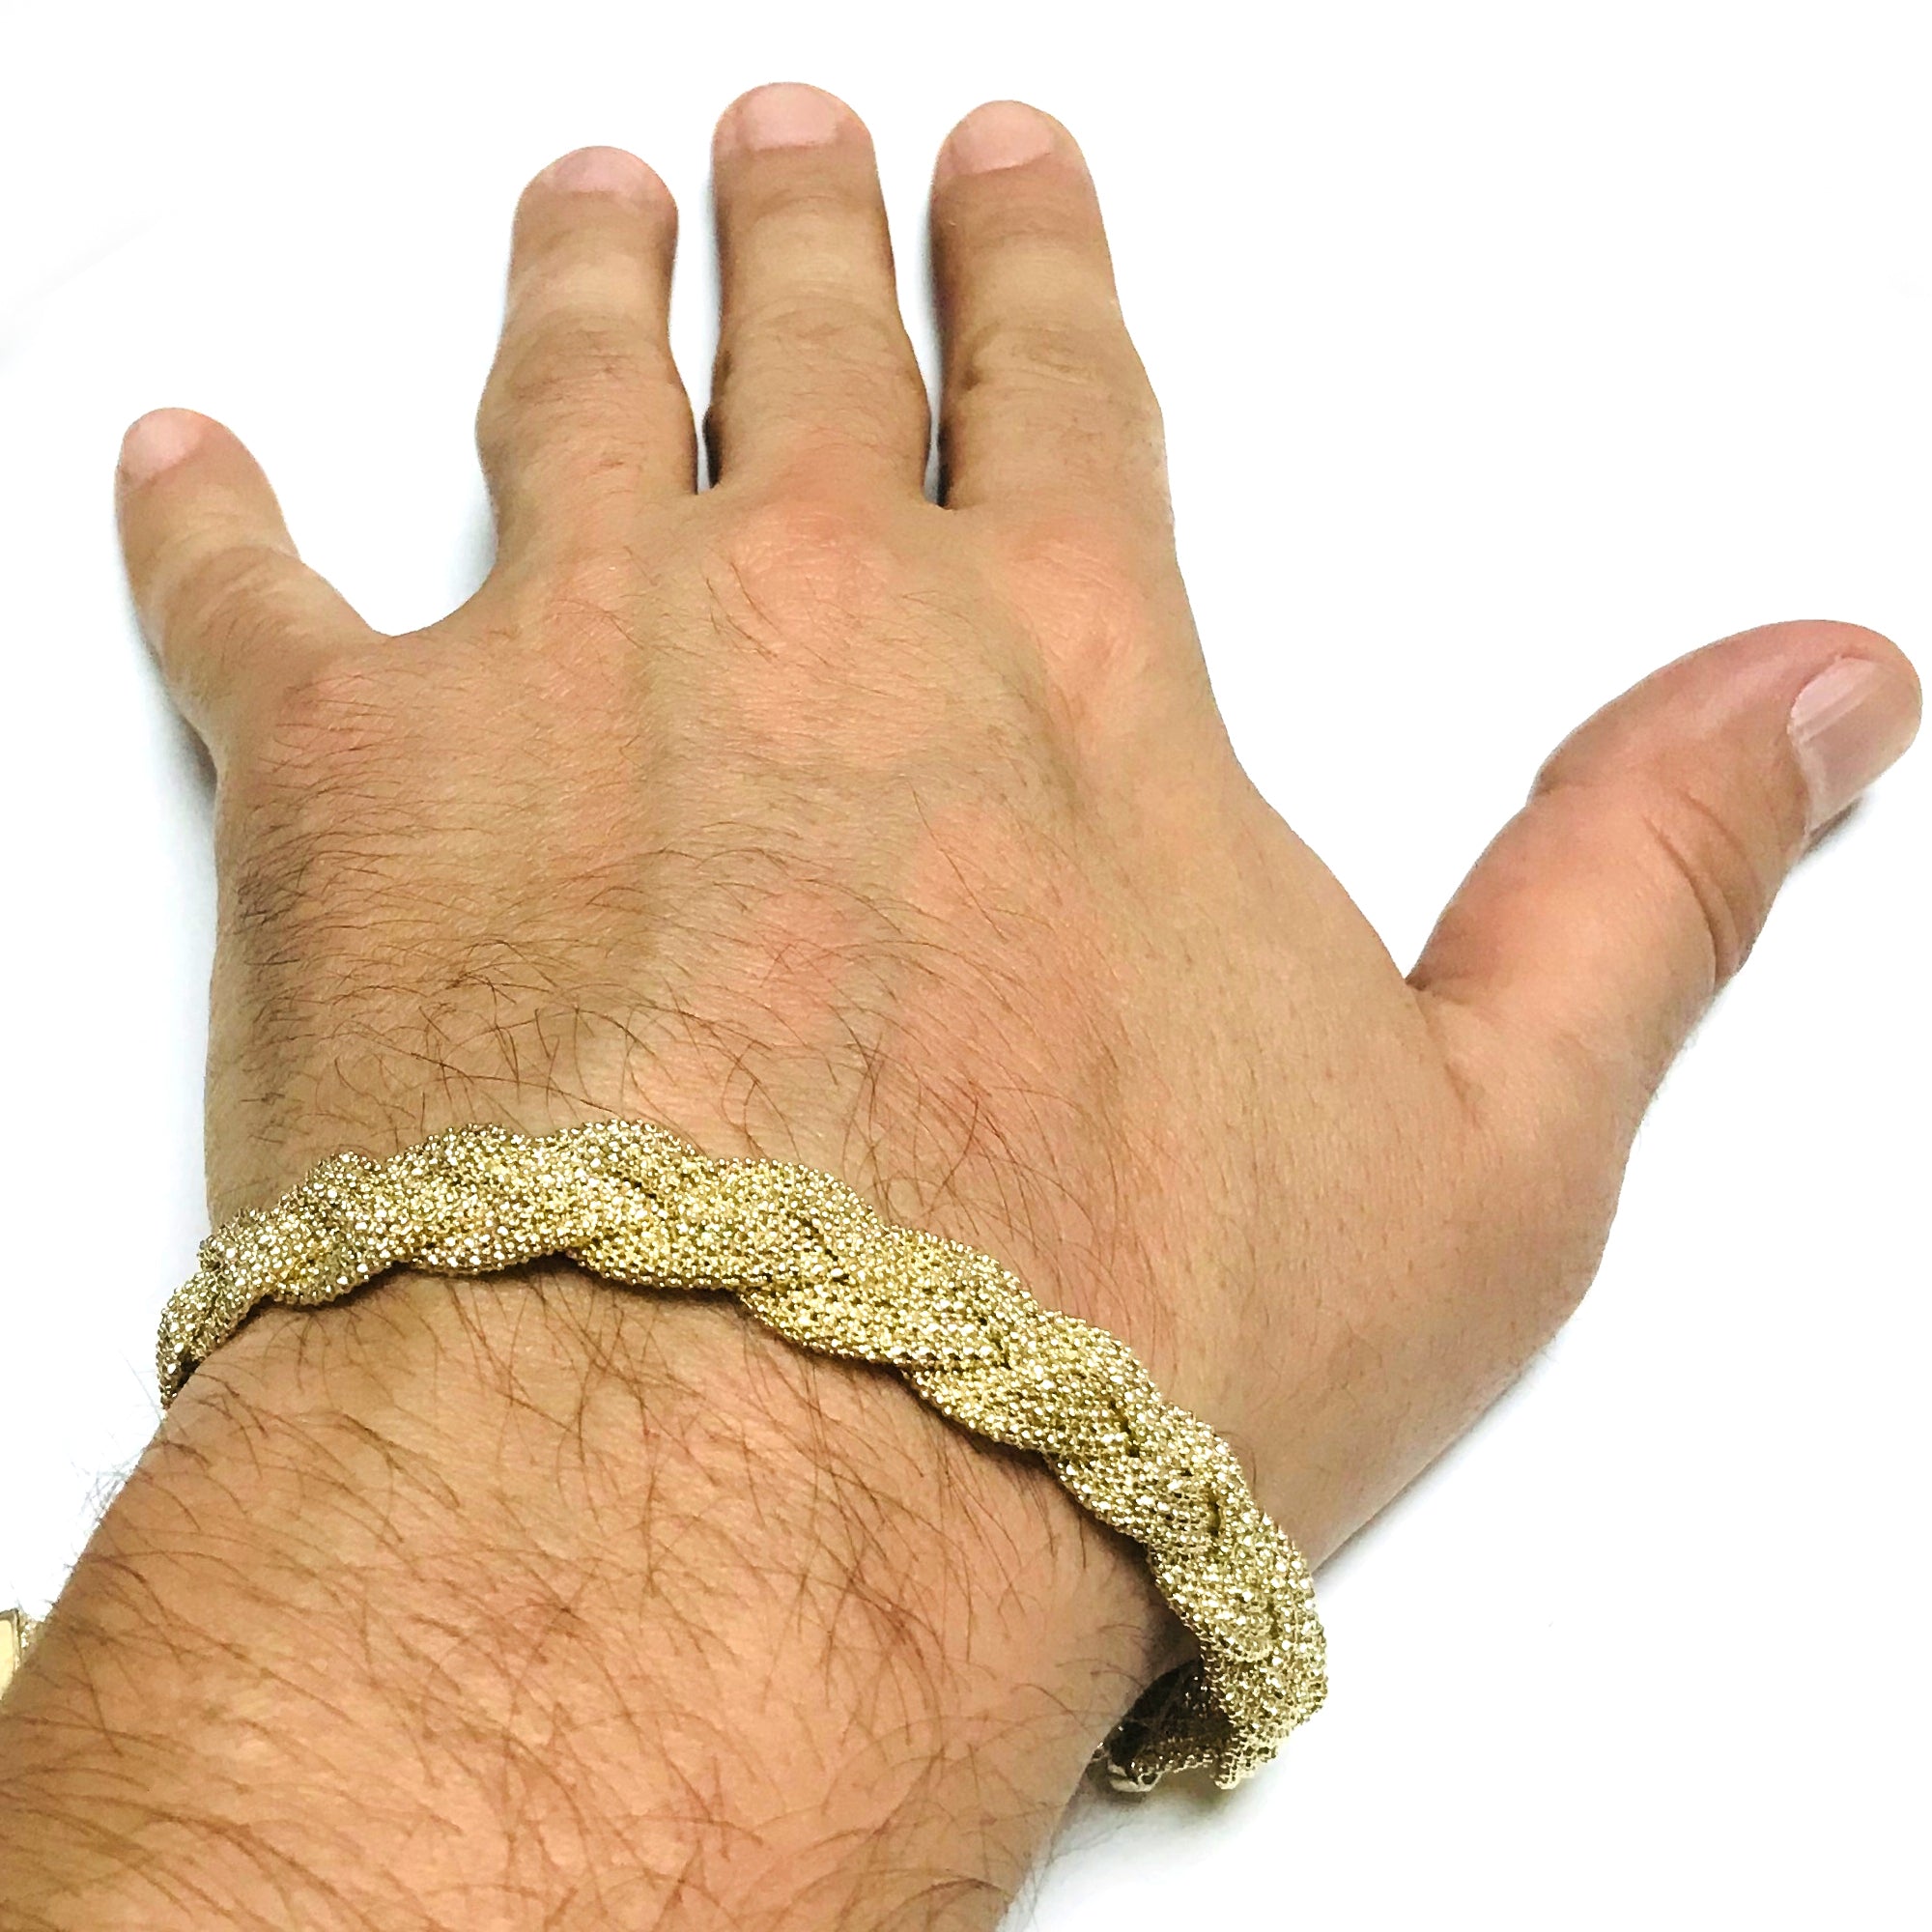 14k Yellow Gold Braided Triple Popcorn Link Womens Bracelet, 7.5" fine designer jewelry for men and women